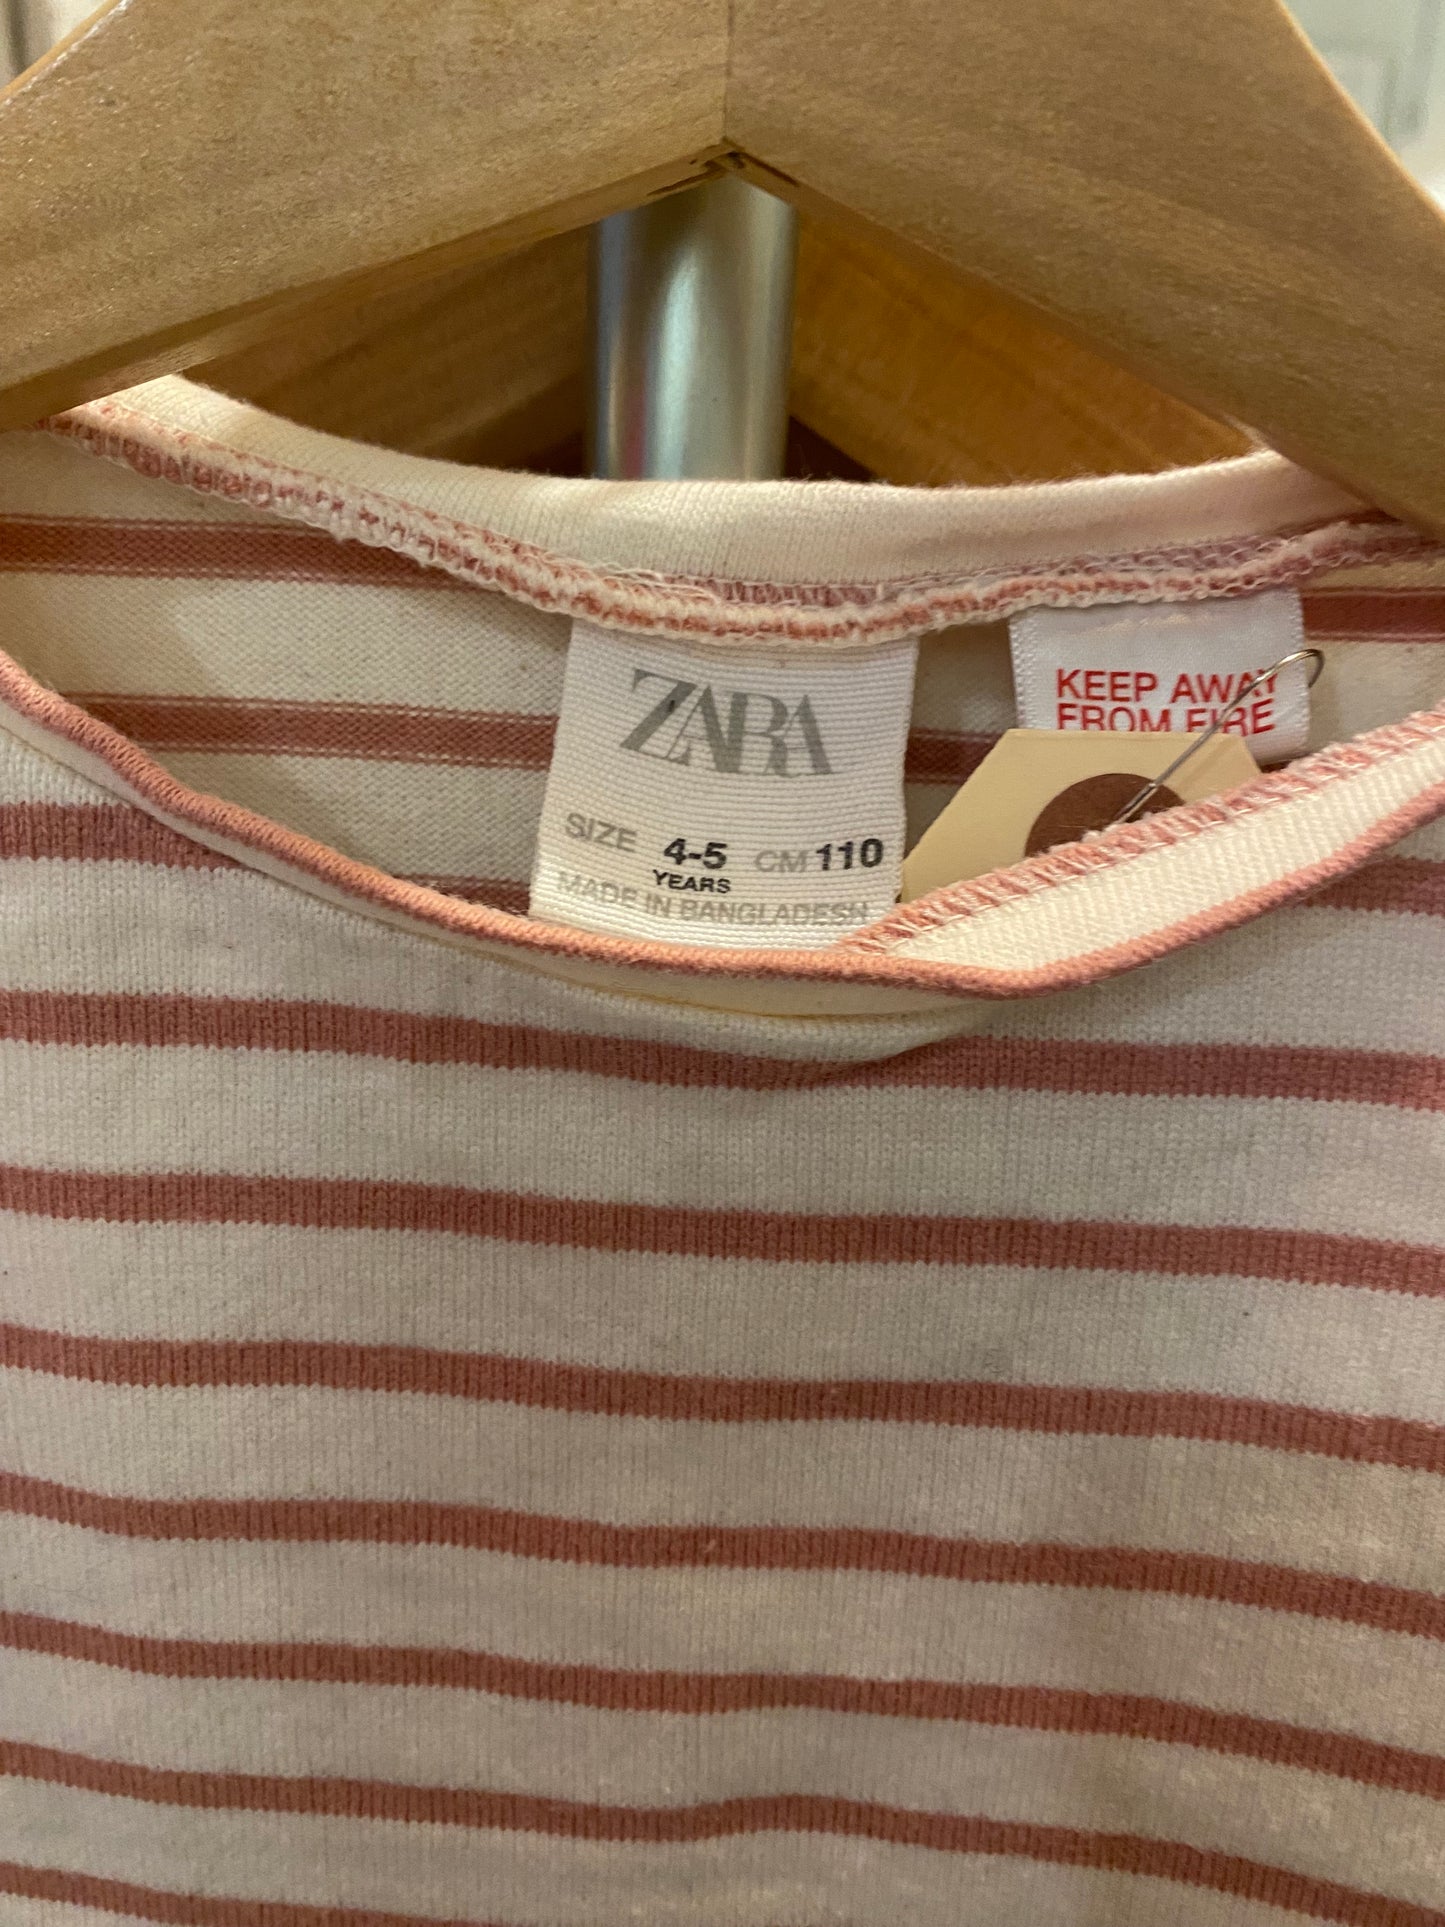 Consignment #7790-06 Zara Girl’s t-shirt cram with pink stripes sz 4-5e